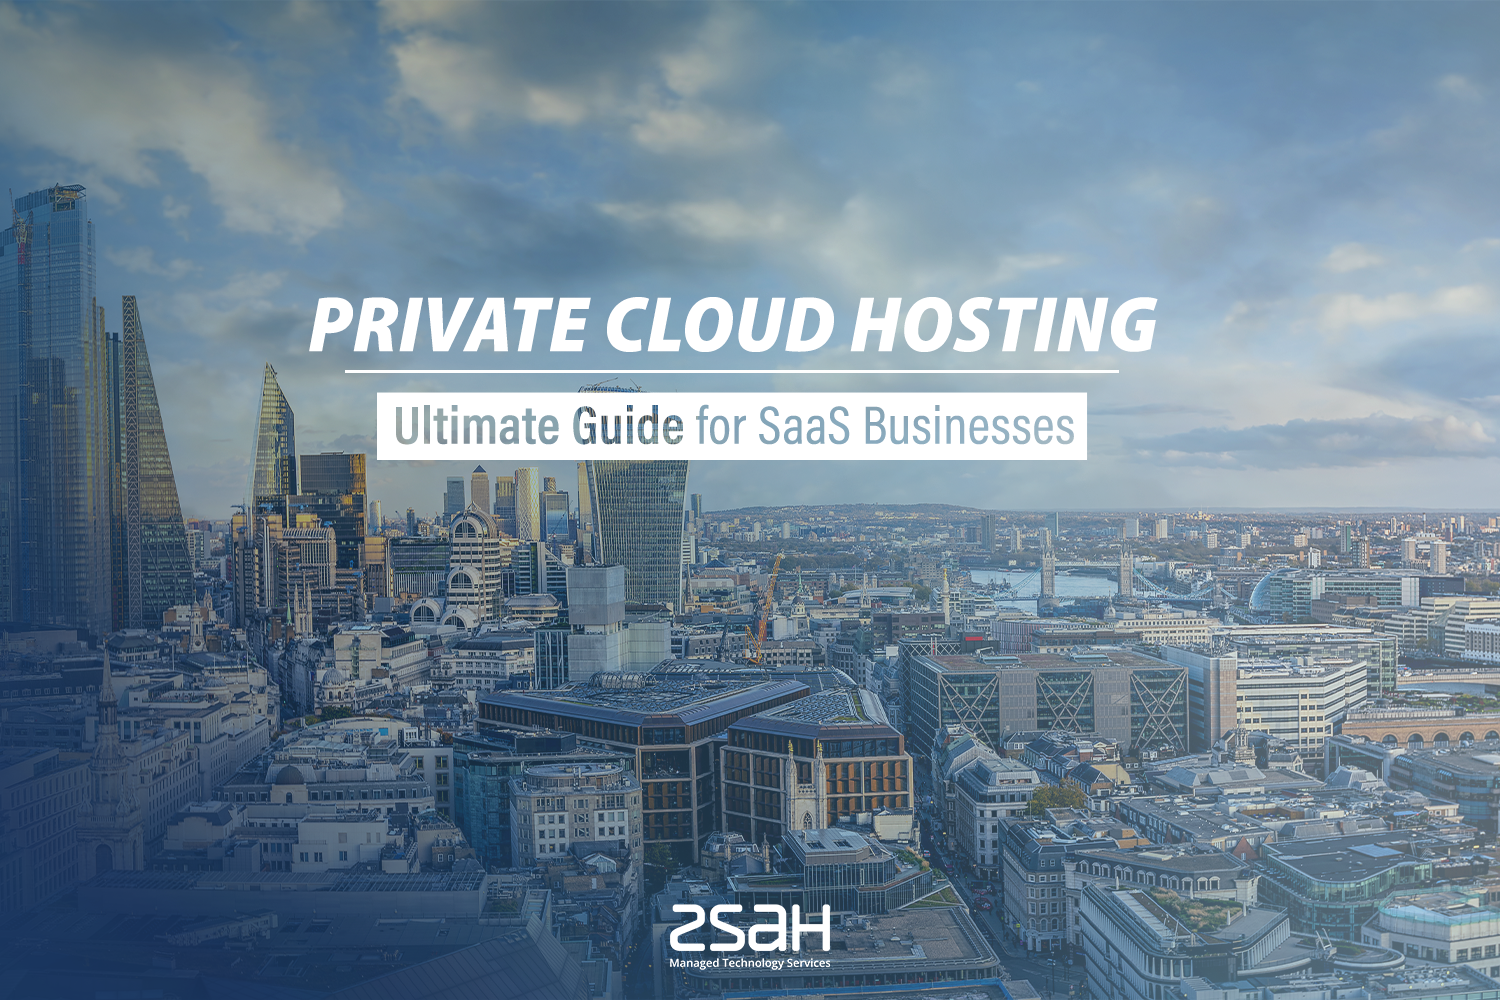 zsah Private Cloud Hosting